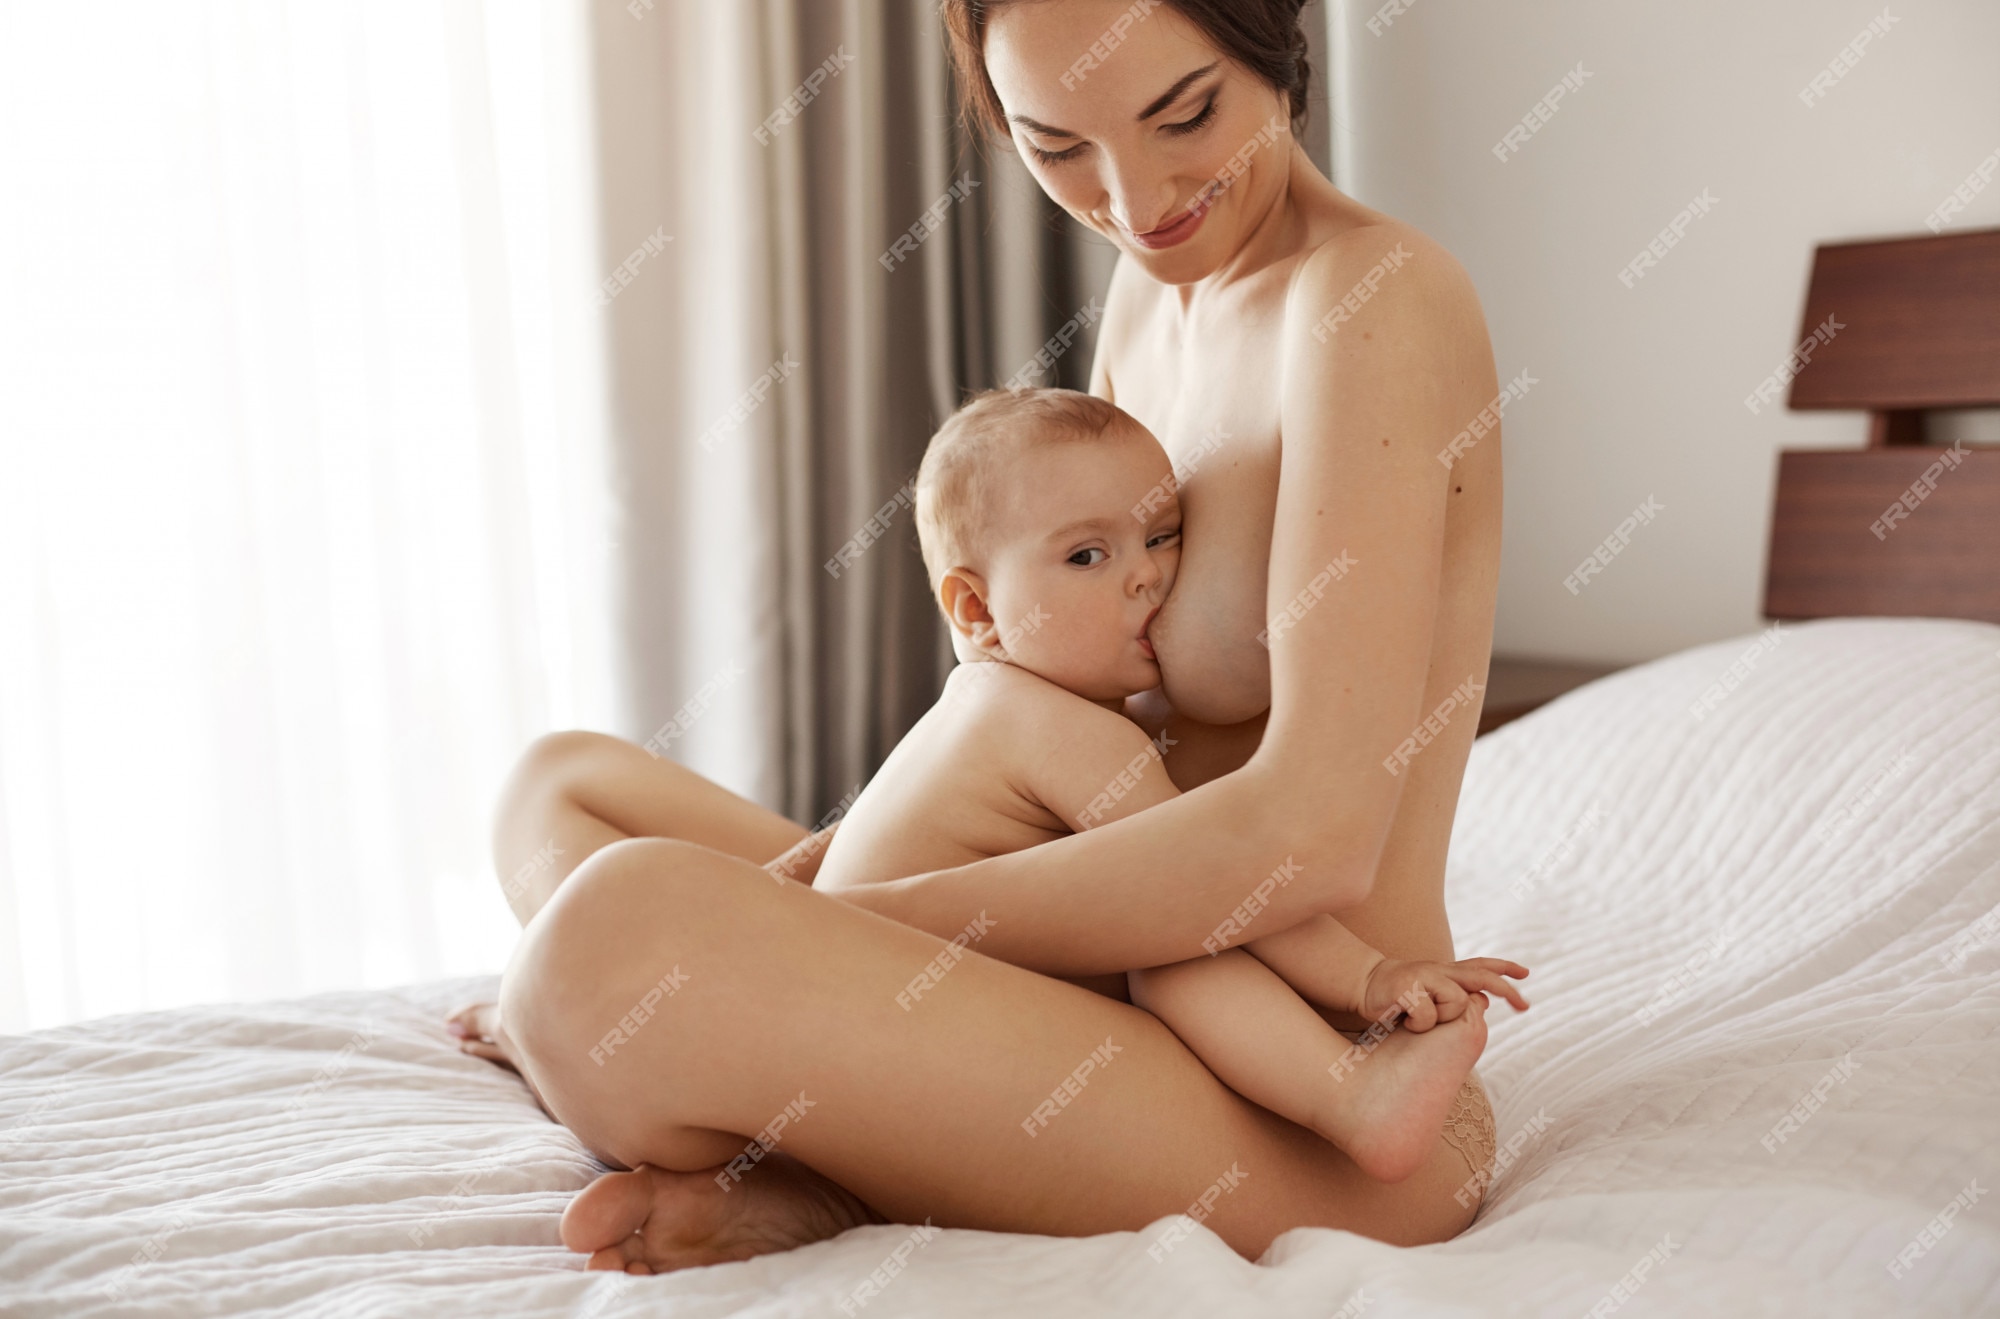 danielle forner share mom sleeping naked photos